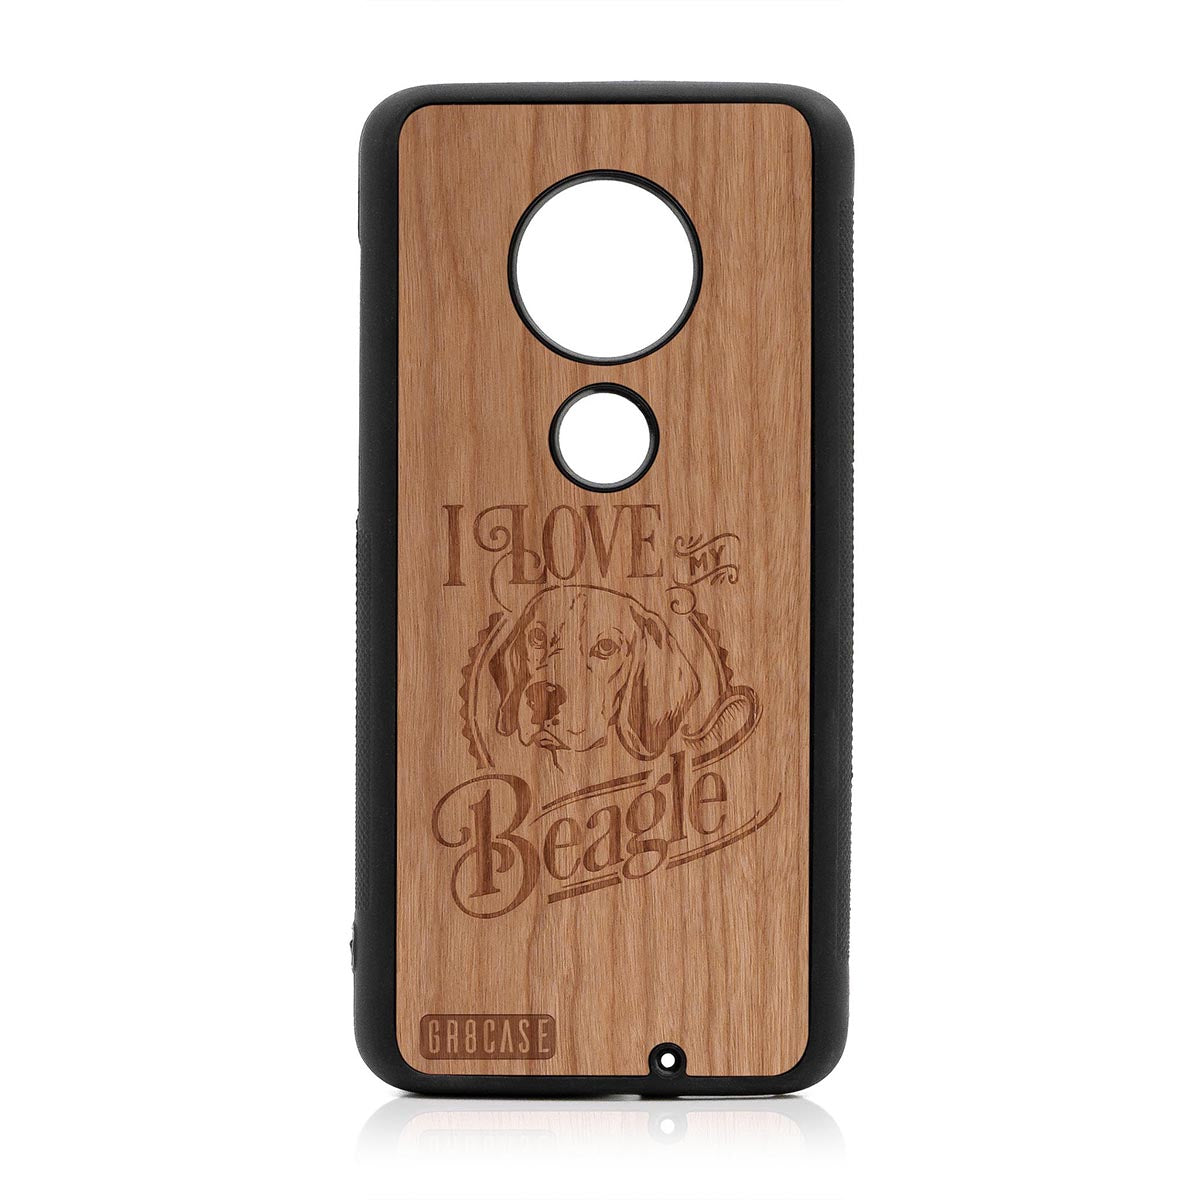 I Love My Beagle Design Wood Case Moto G7 Plus by GR8CASE